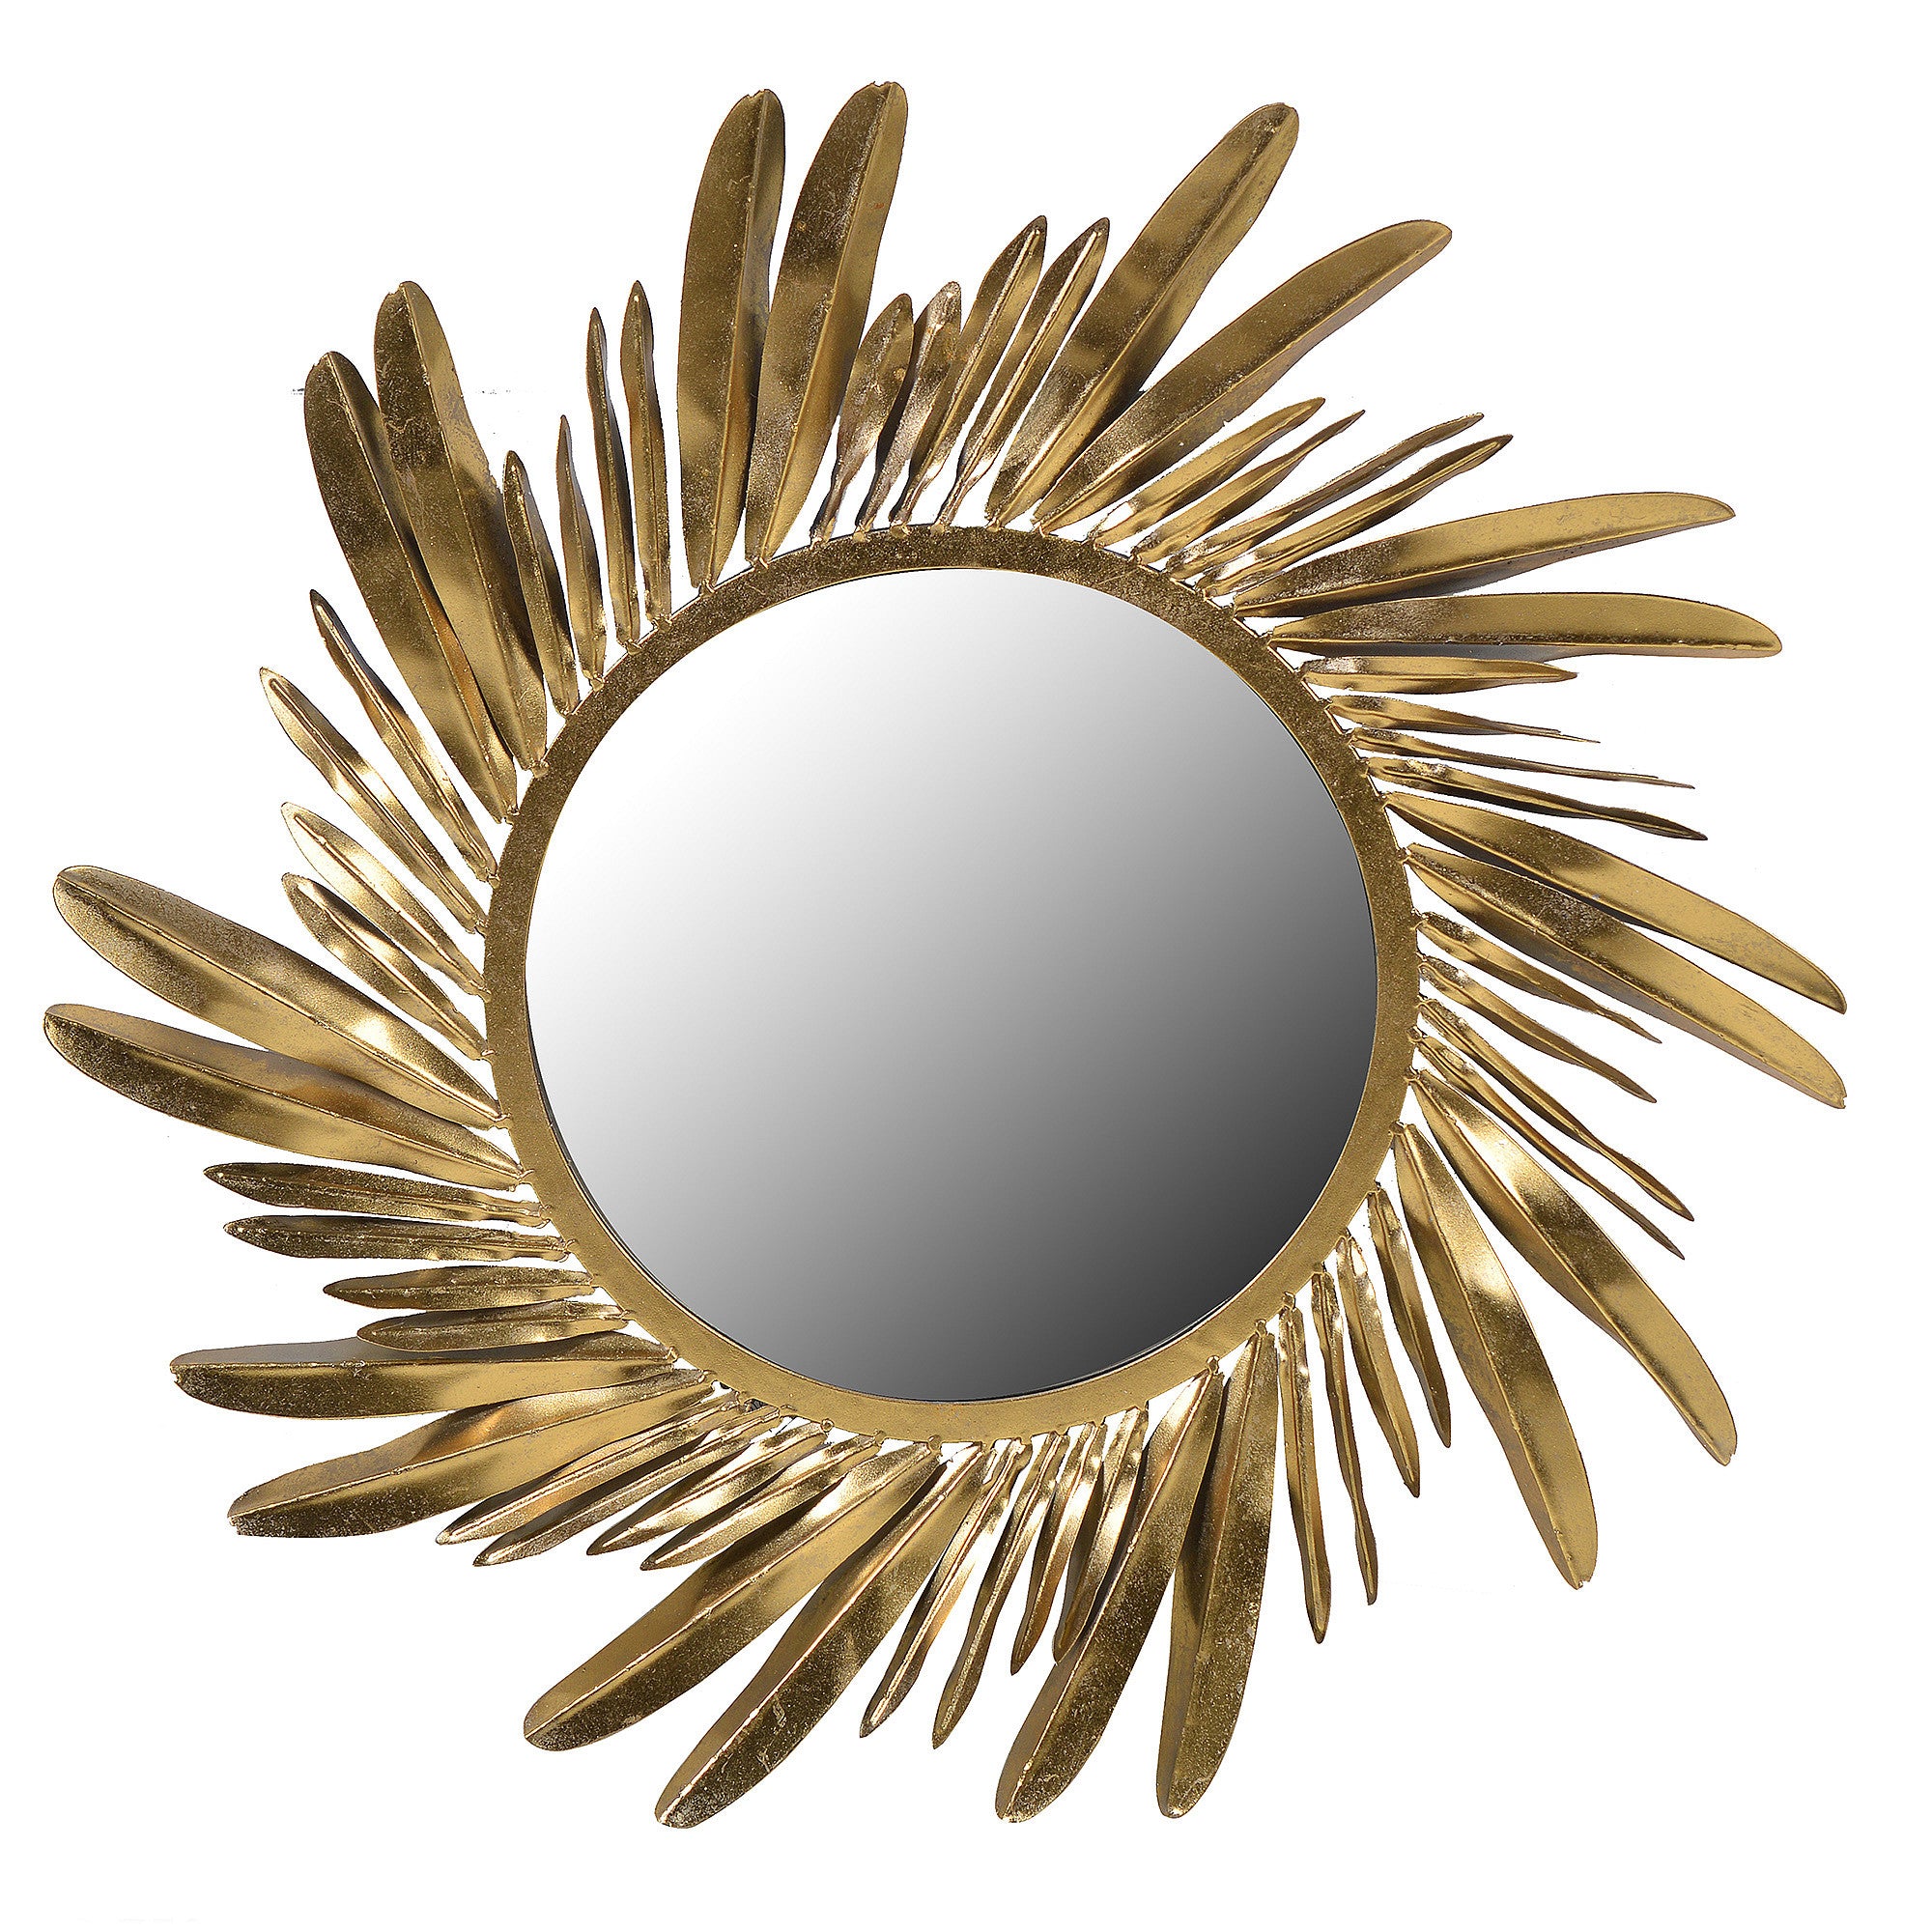 Golden Feather Mirror (Second - D)